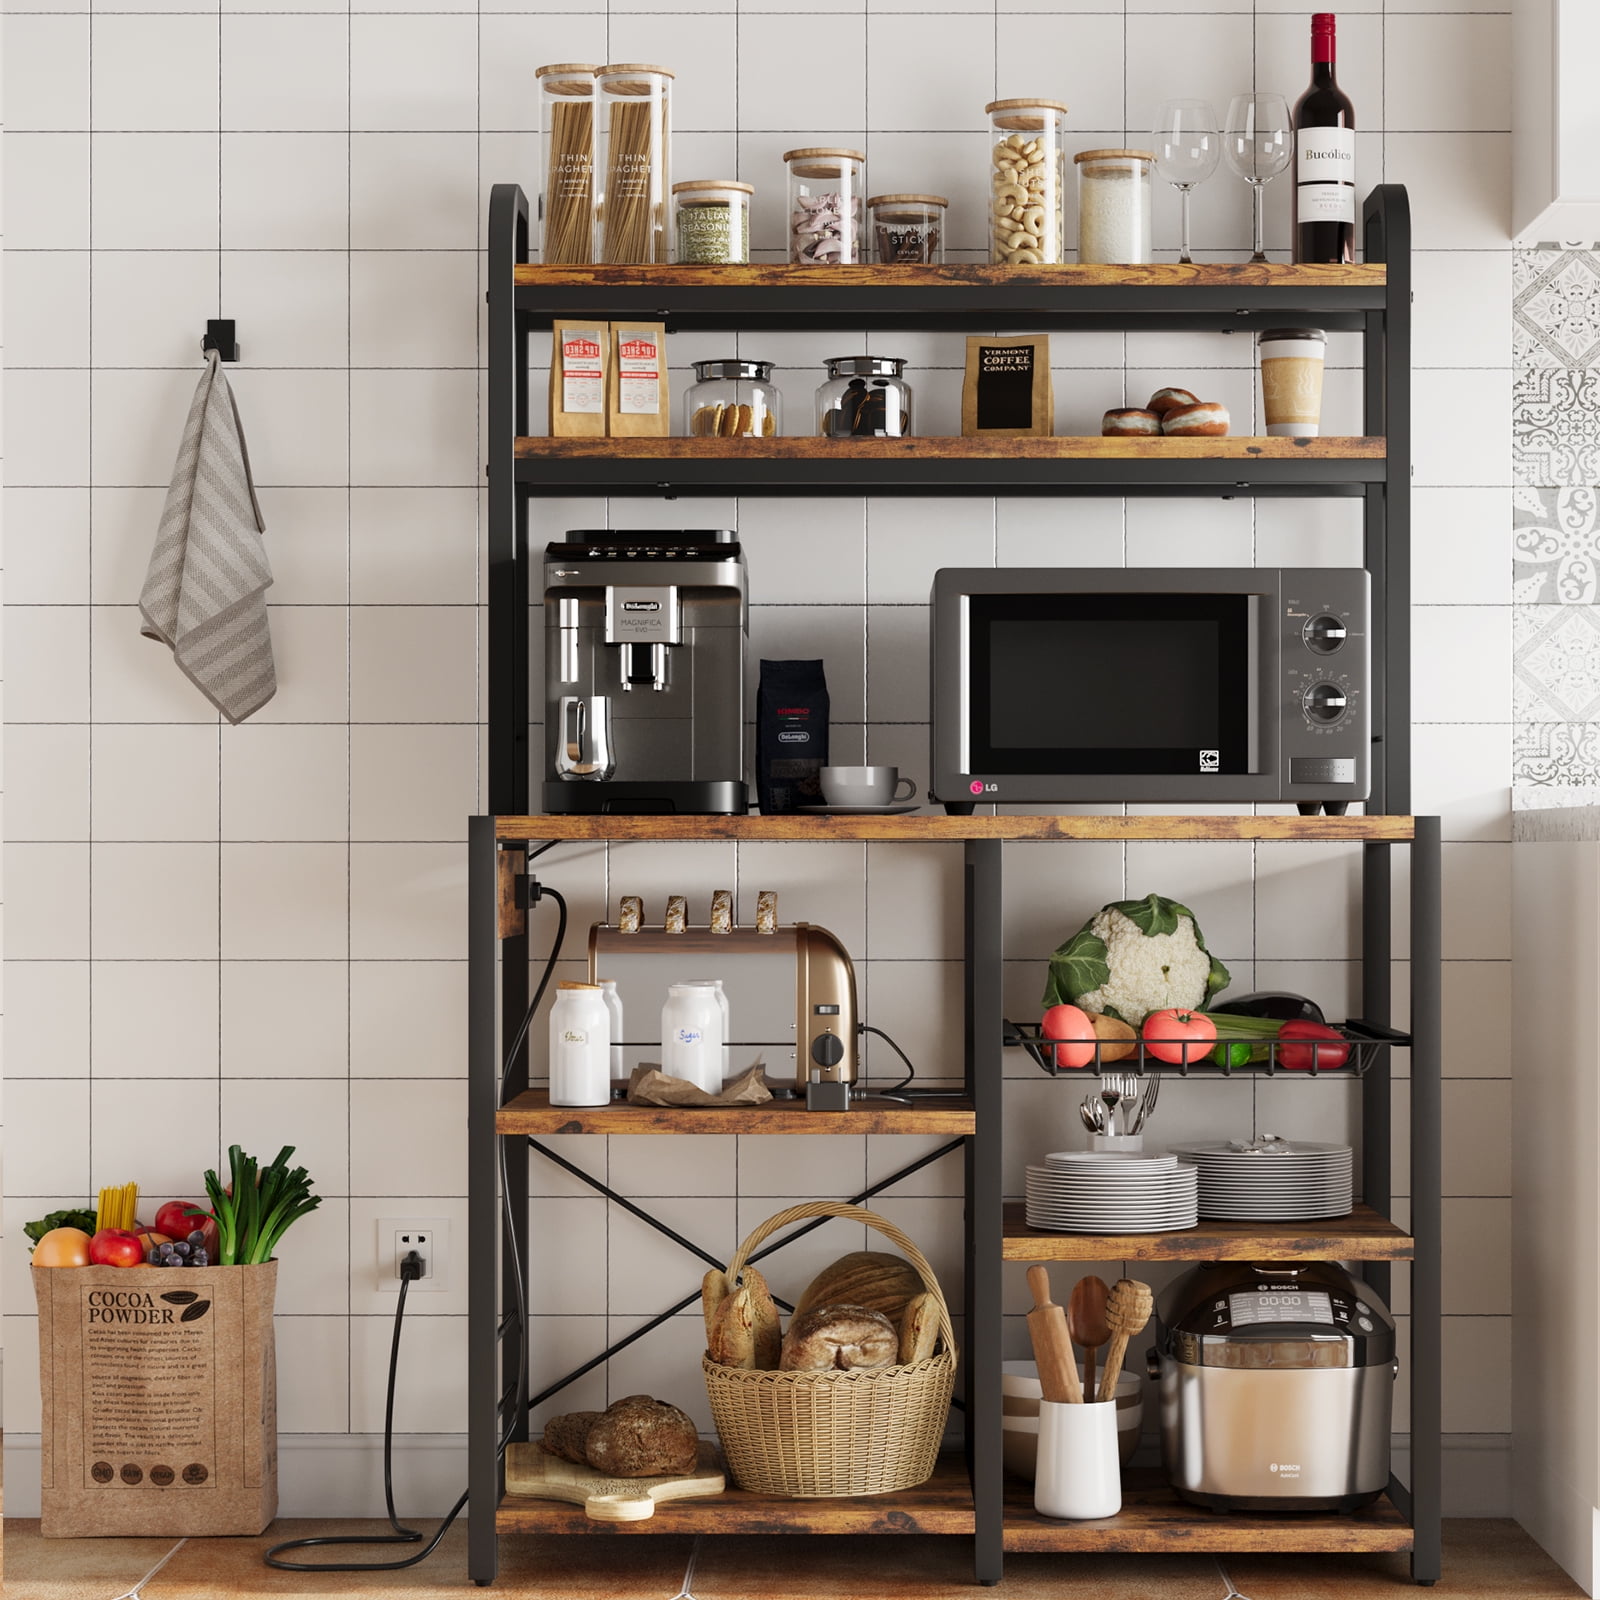  KirKical 3-Tier Coffee Bar Cabinet with Mini Fridge Space,  Heavy-Duty Rustic Grey Microwave Stand Baker Rack, Utility Storage Organizer  Shelf for Home Kitchen Dorm, Slate Grey : Home & Kitchen